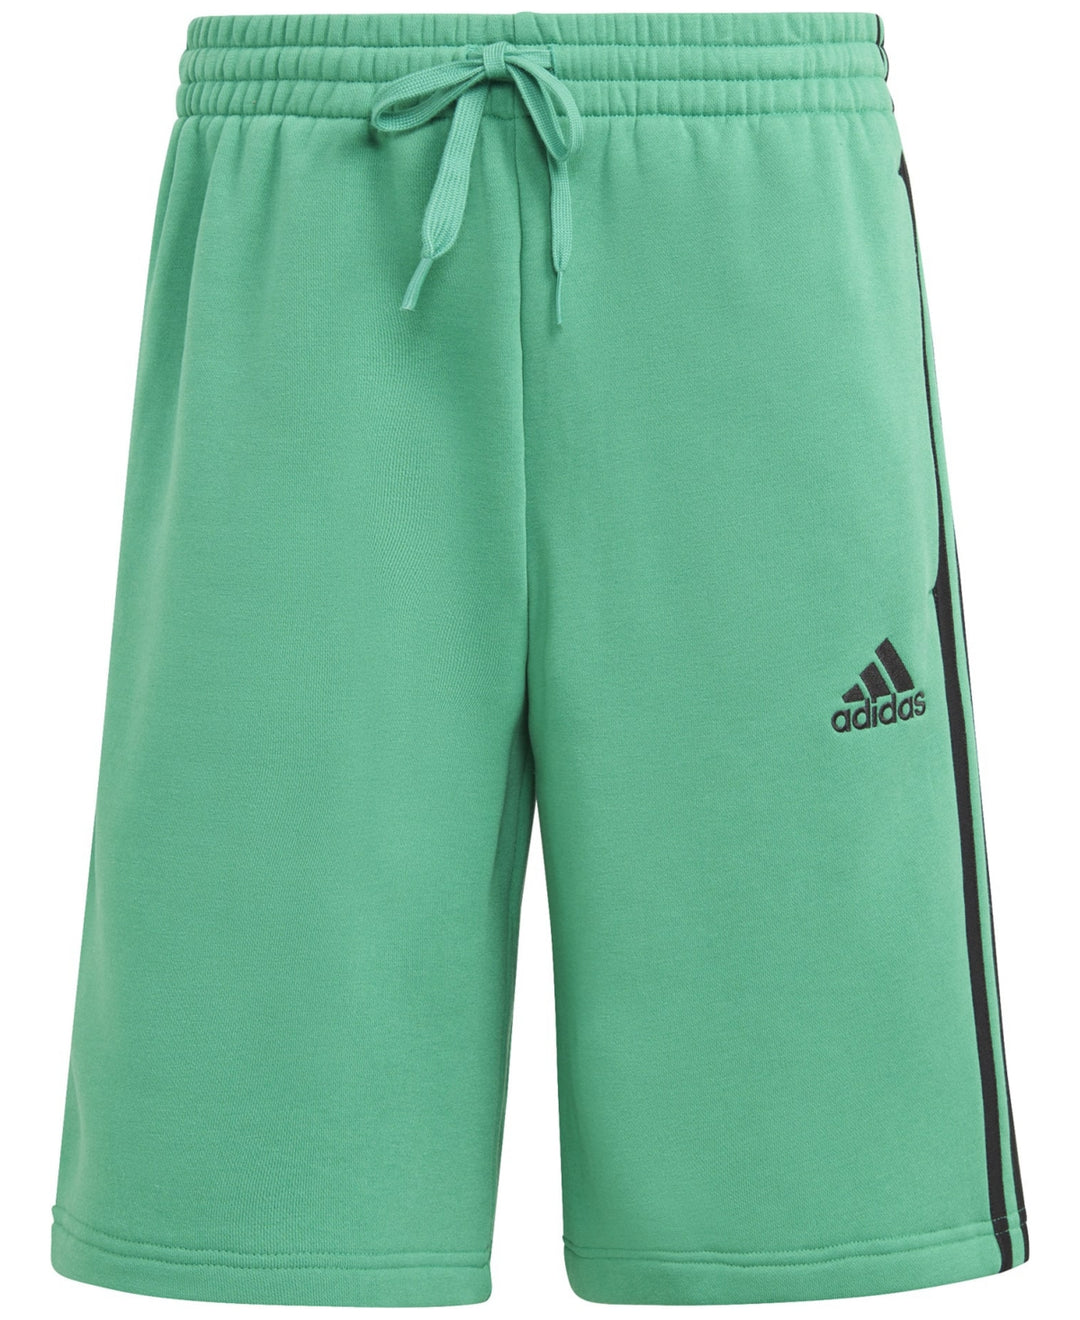 adidas Men's 3 Stripes 10 Fleece Shorts Green Size X-Large